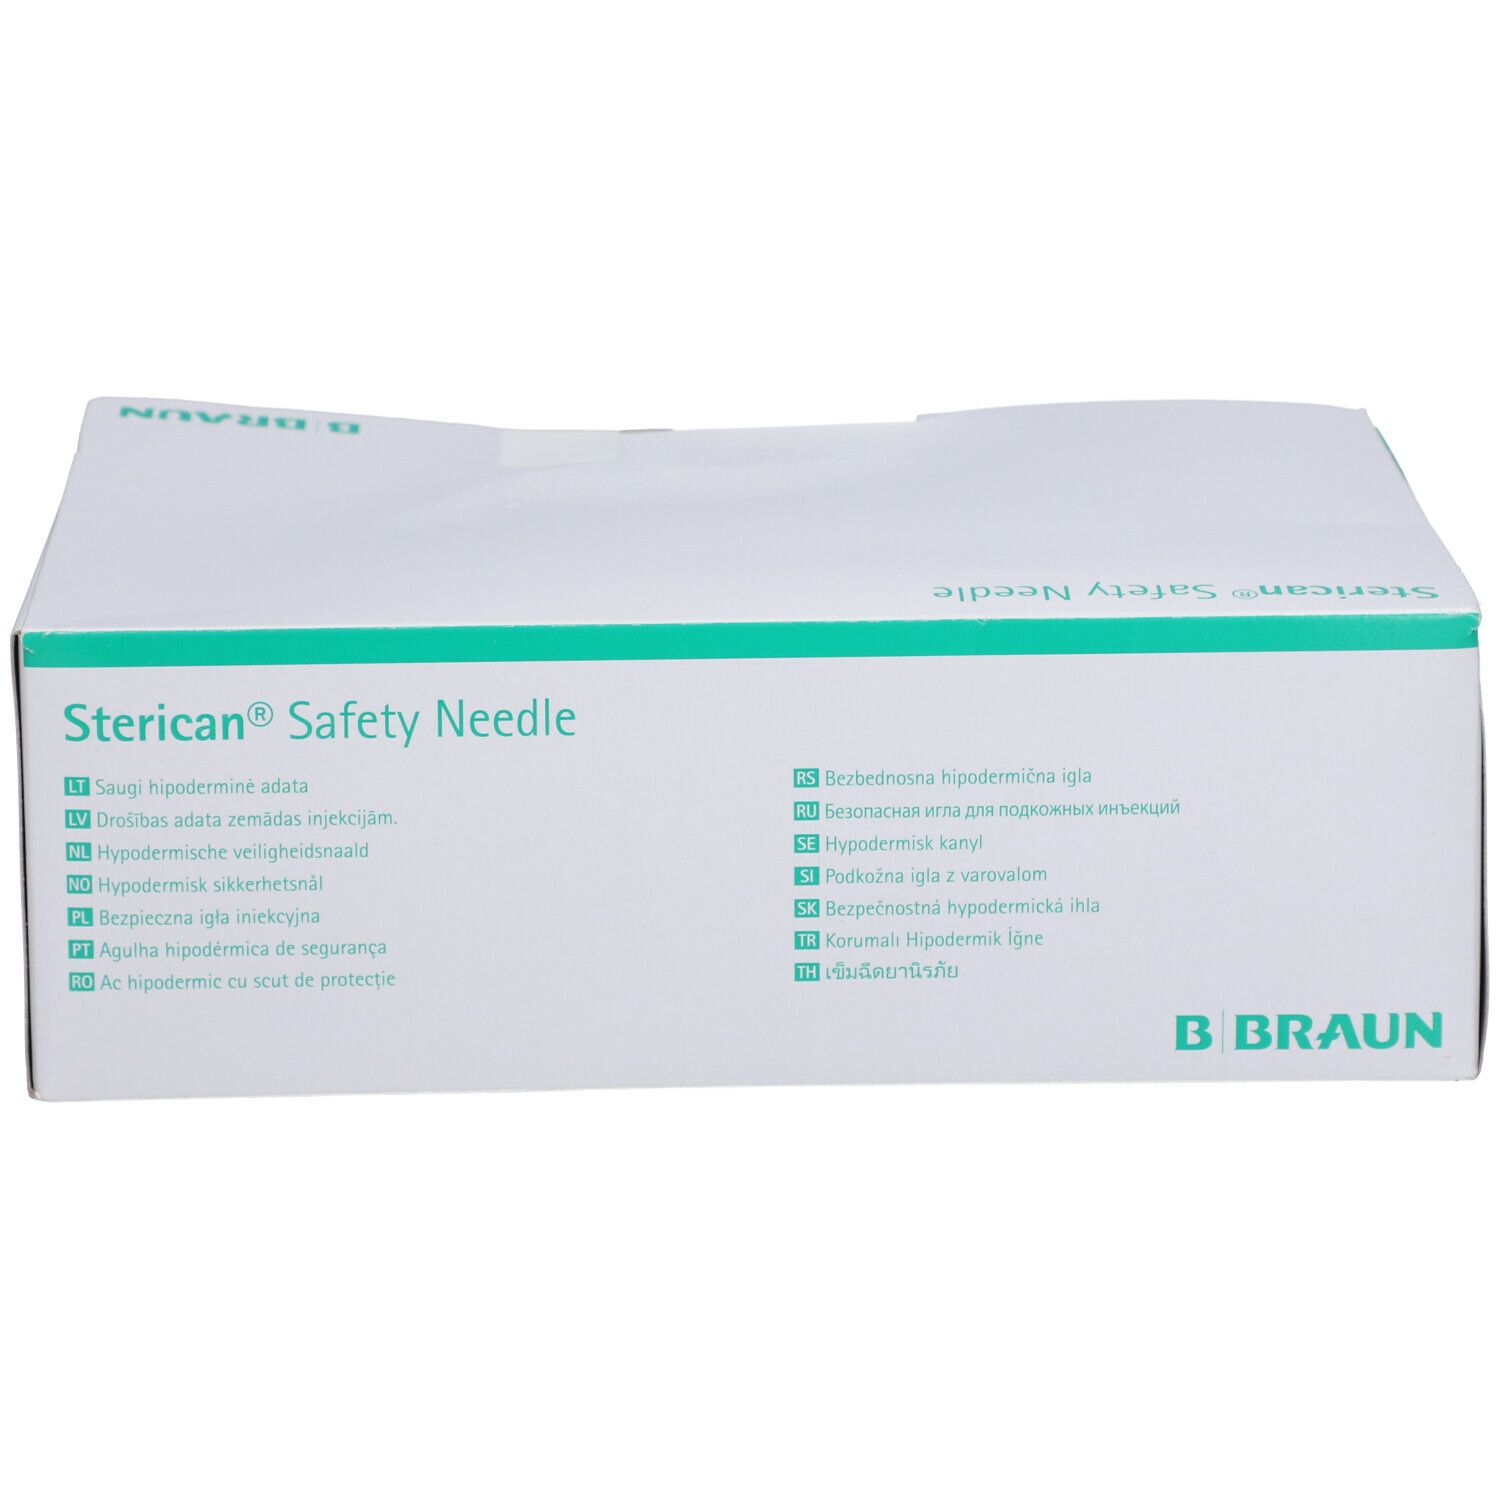 Sterican® Safety Kanülen 23 G x 1 0,6 x 25 mm EU